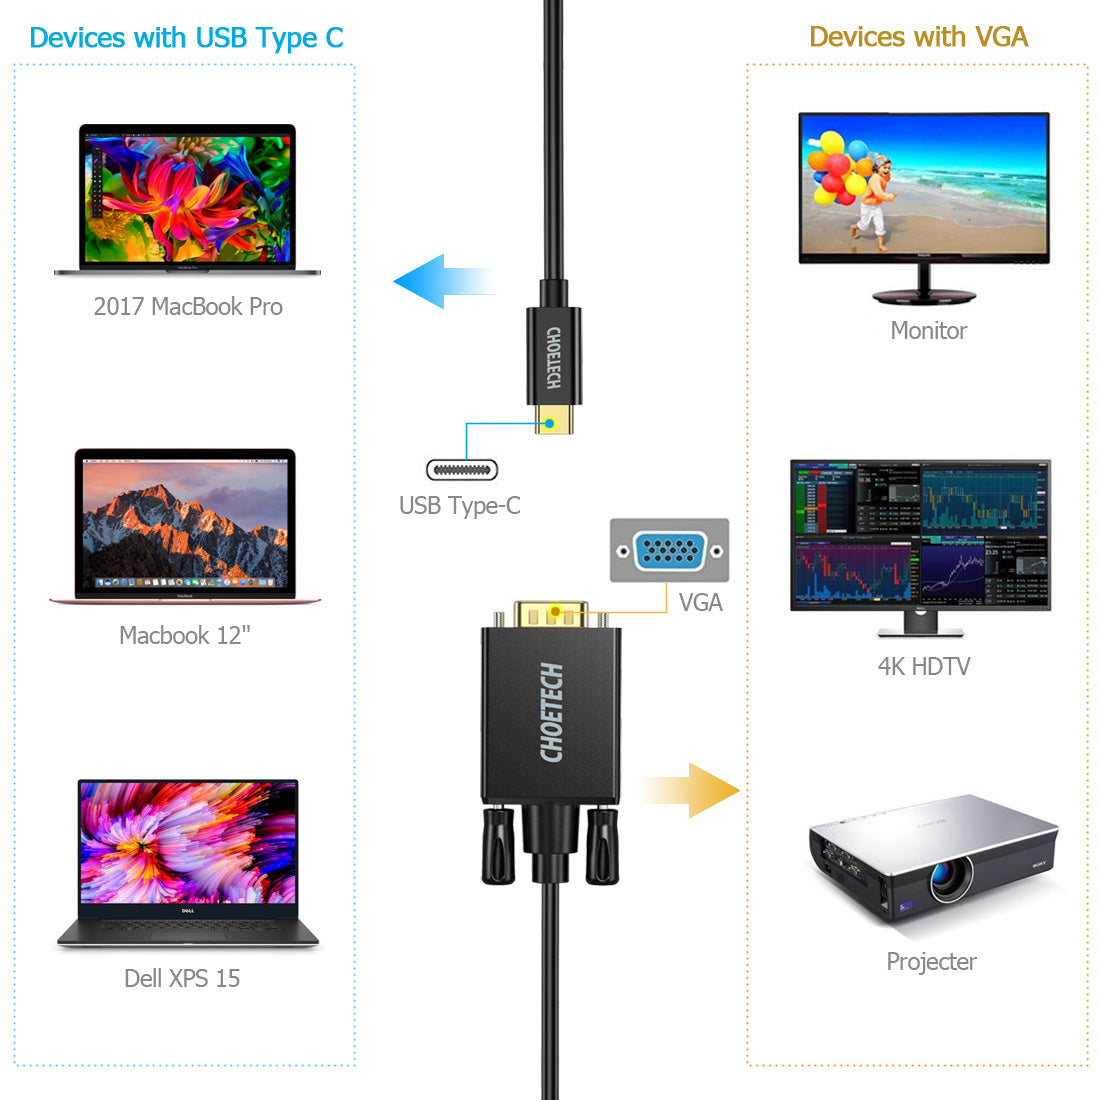 XCV-1801 HDMI/VGA/DP/MIDP cable